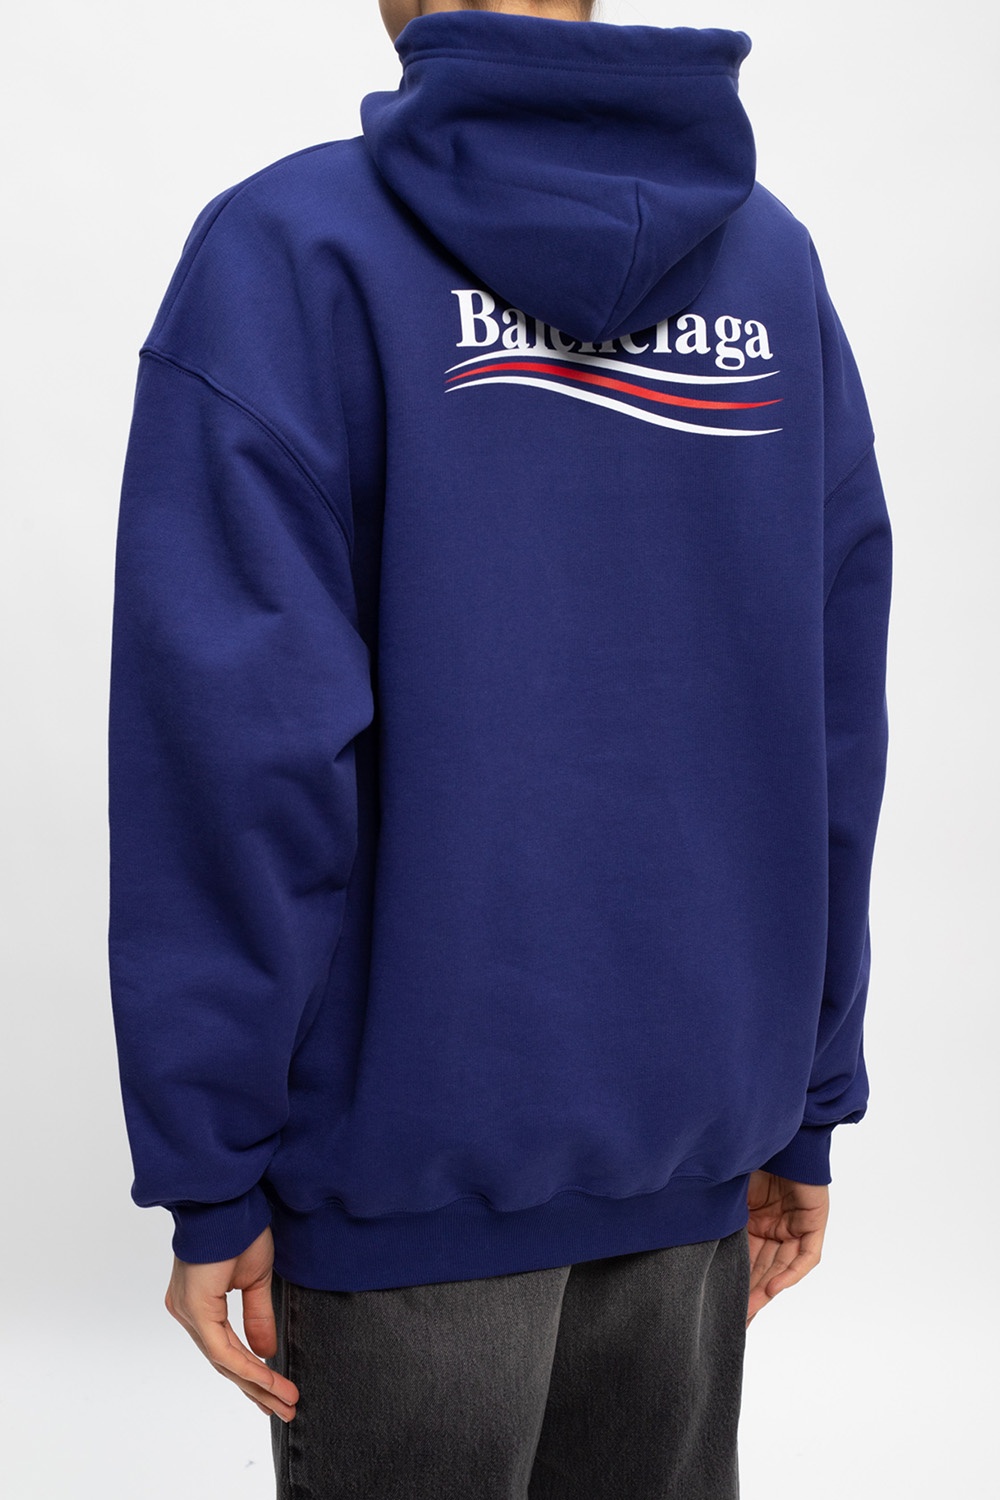 Balenciaga Oversize hoodie with Company